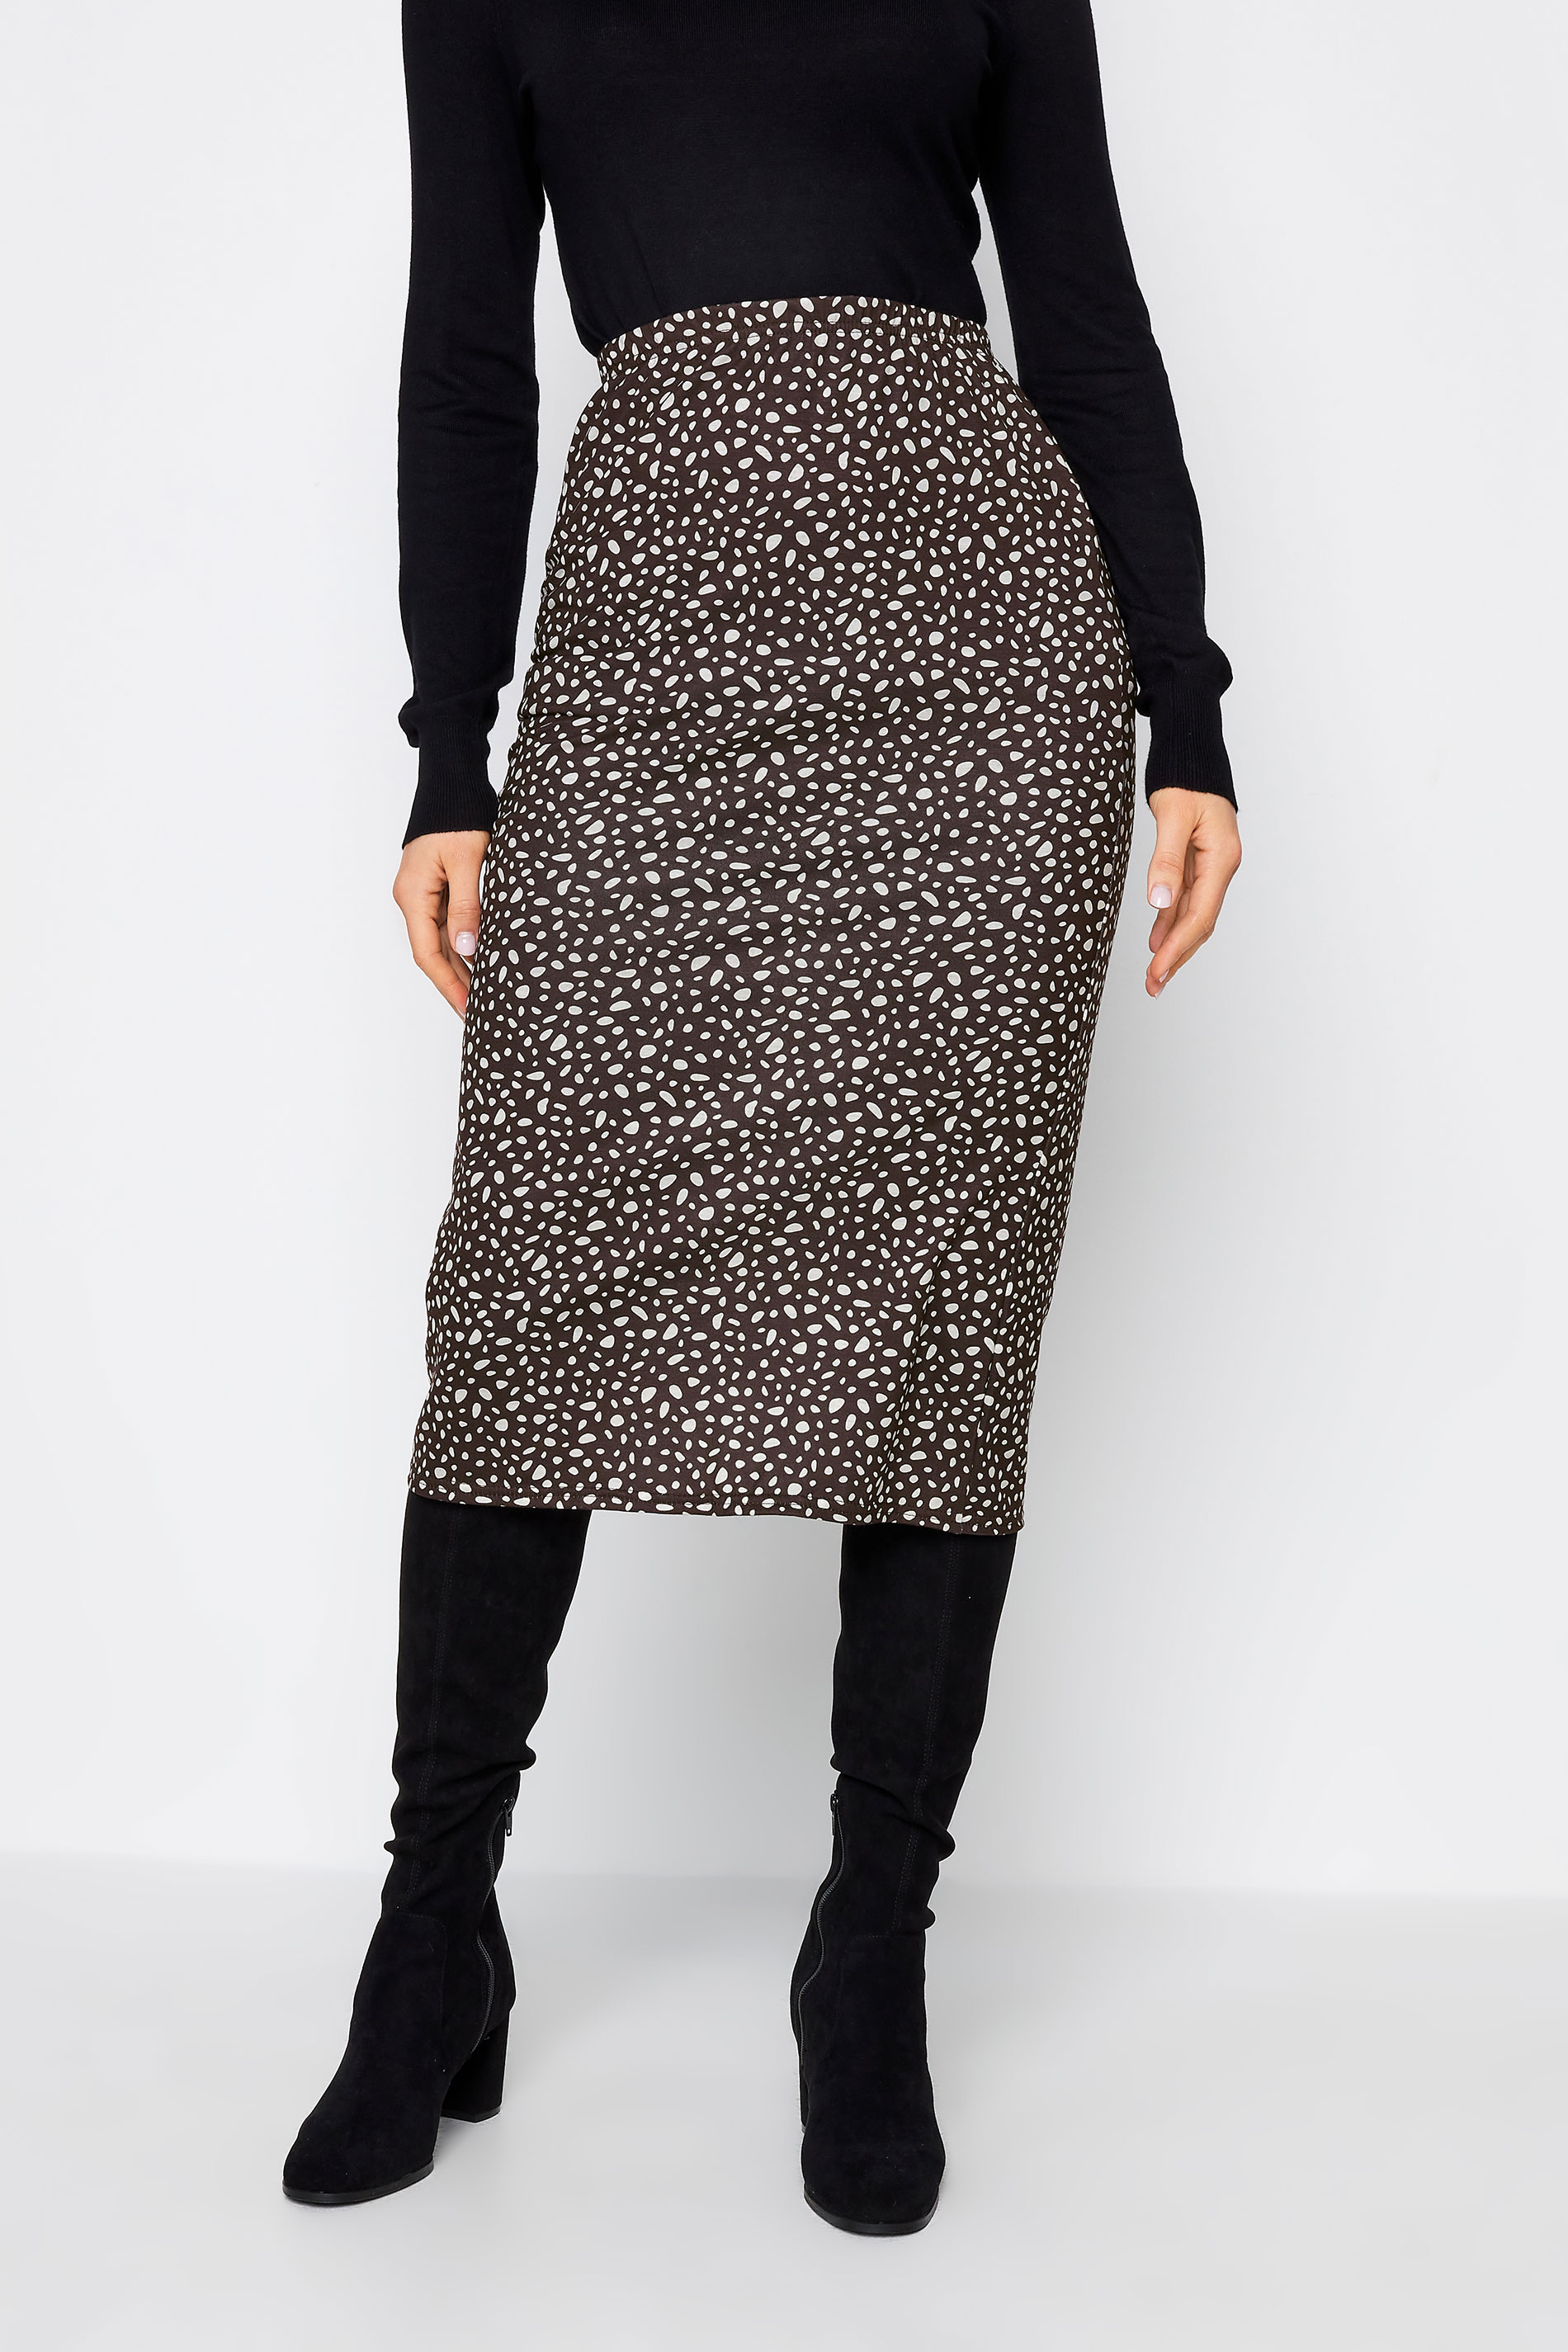 LTS Tall Chocolate Brown Spot Print Midi Skirt | Long Tall Sally  2